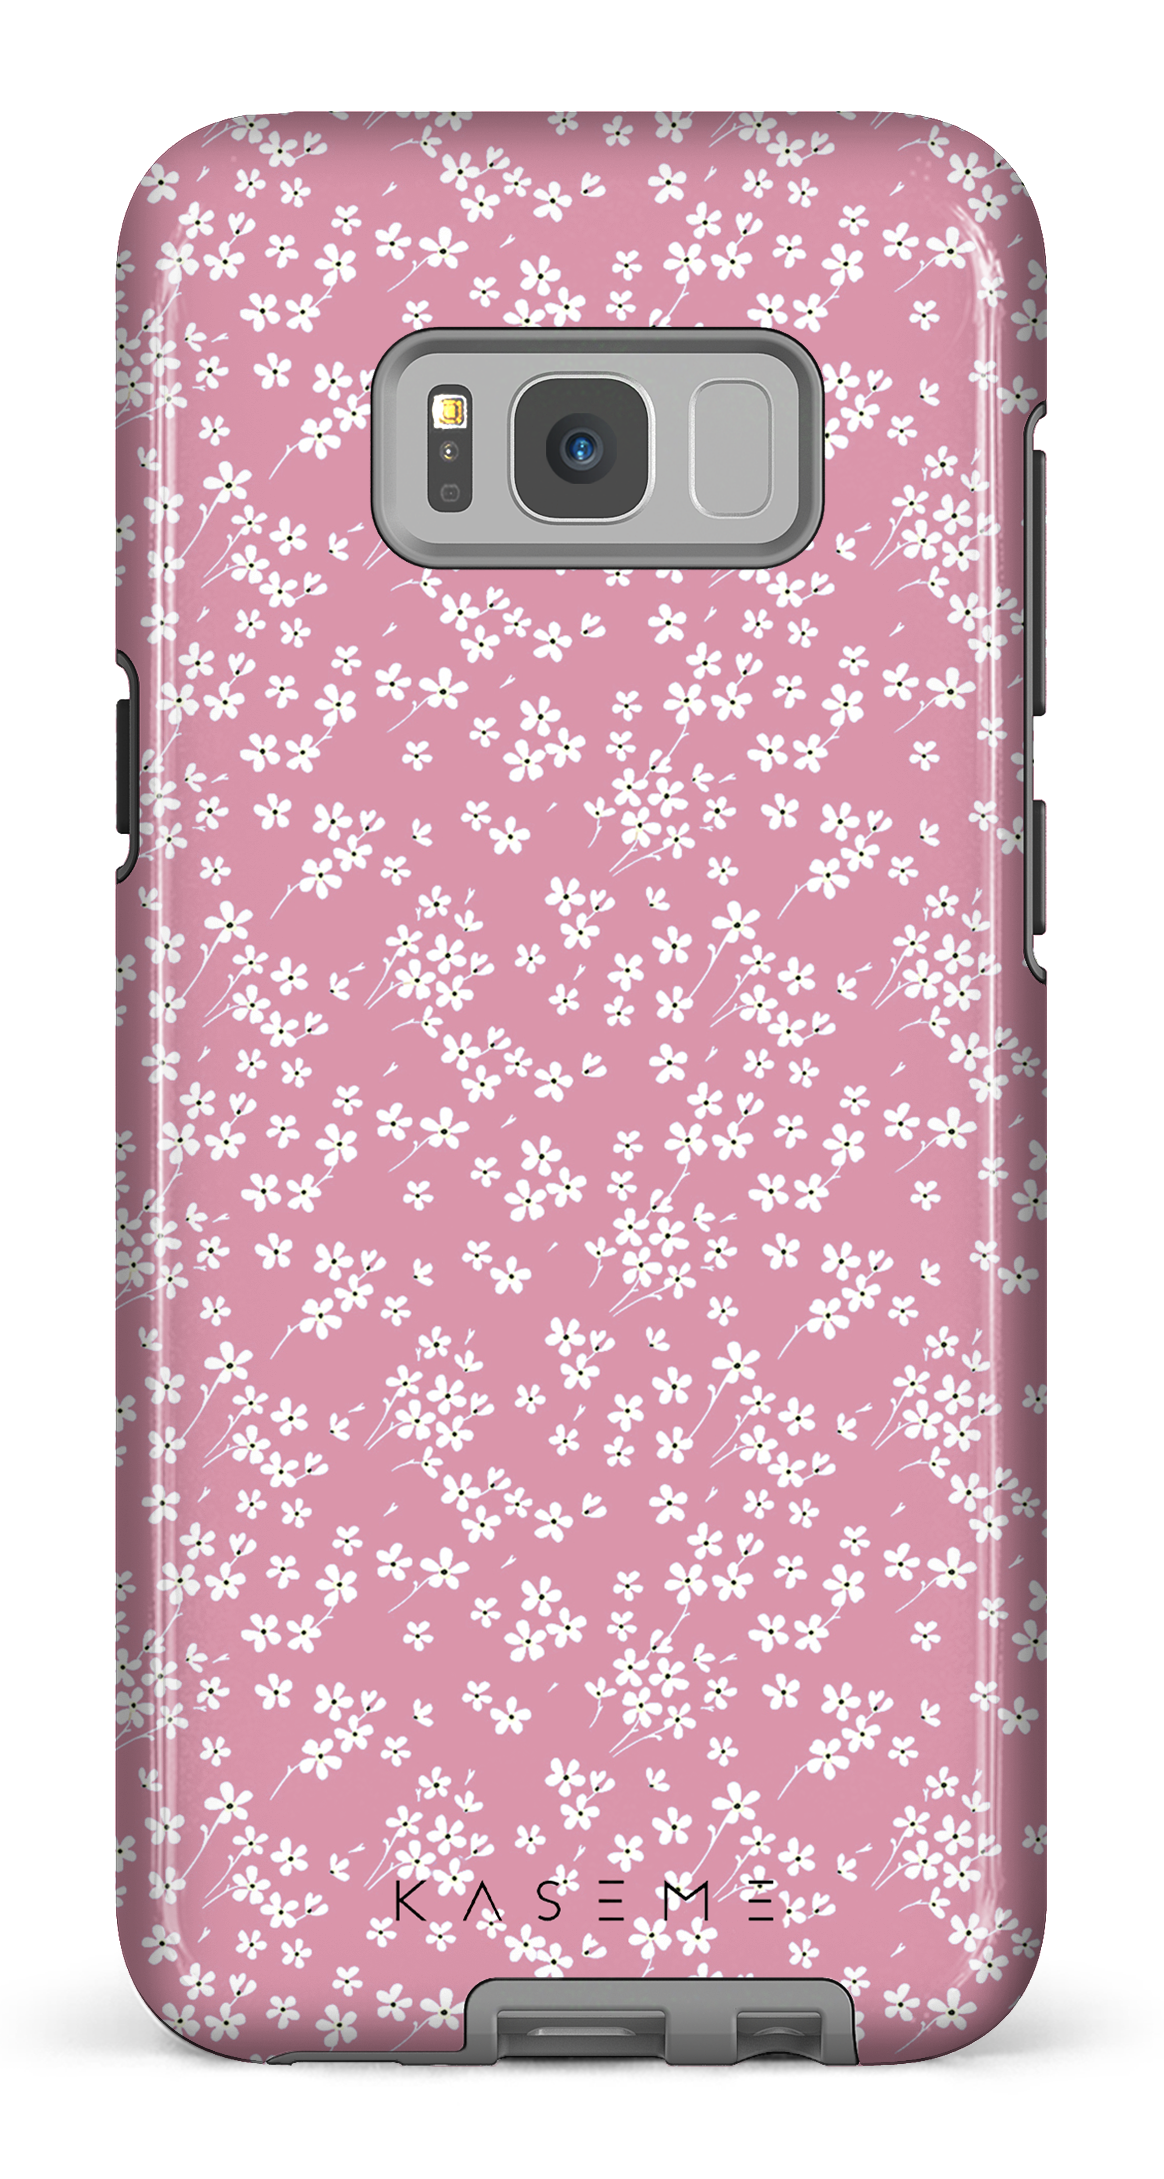 Posy pink - Galaxy S8 Plus